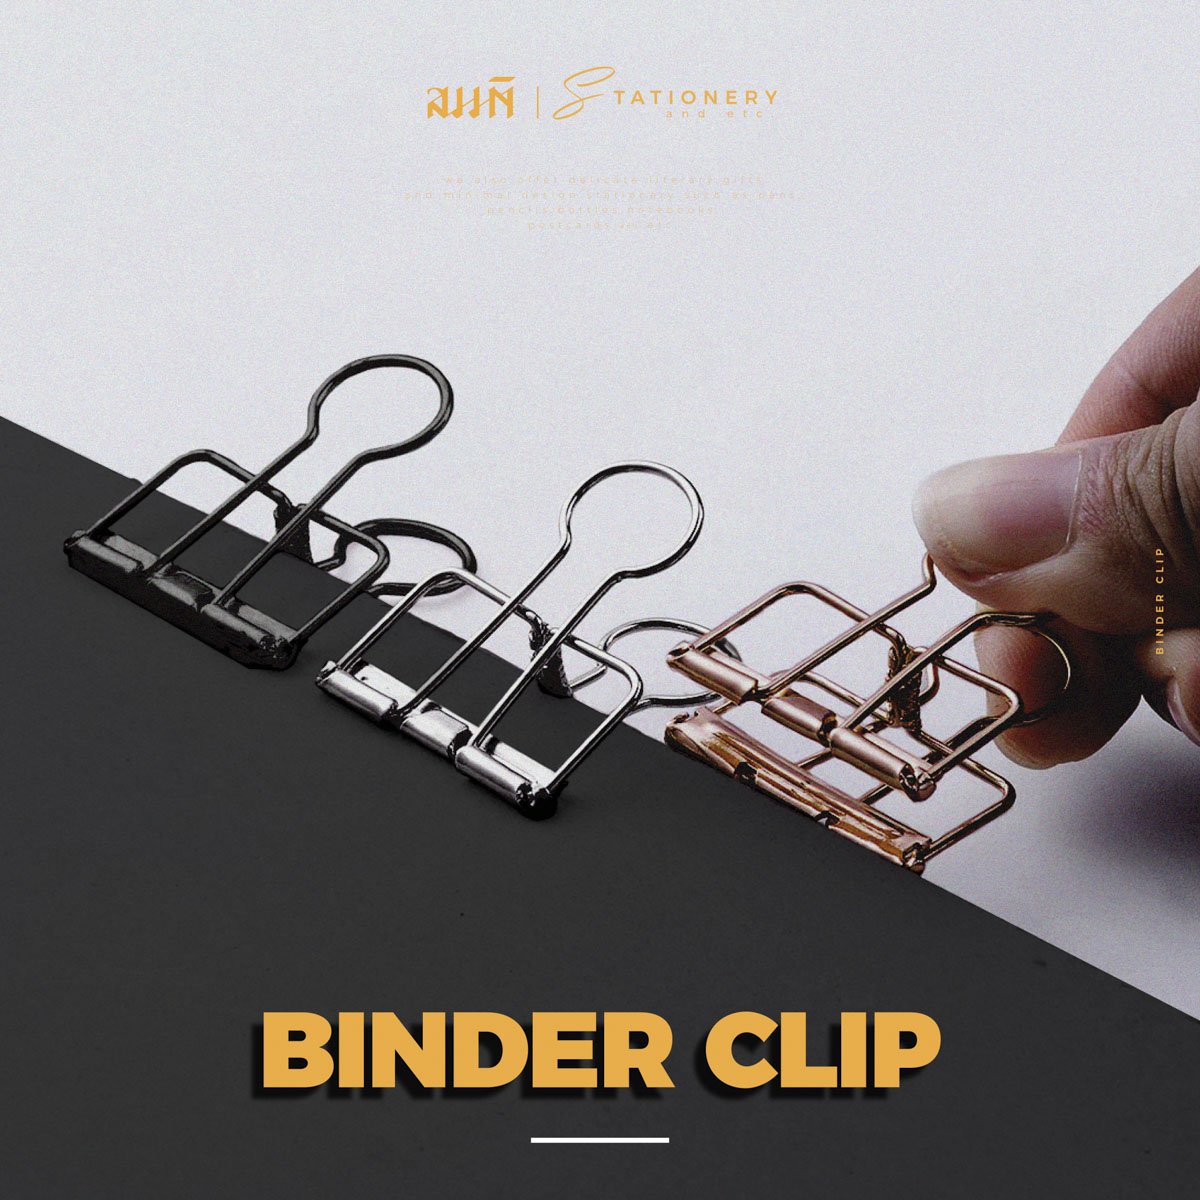 Binder Clips | คลิปหนีบกระดาษดีไซน์ minimal